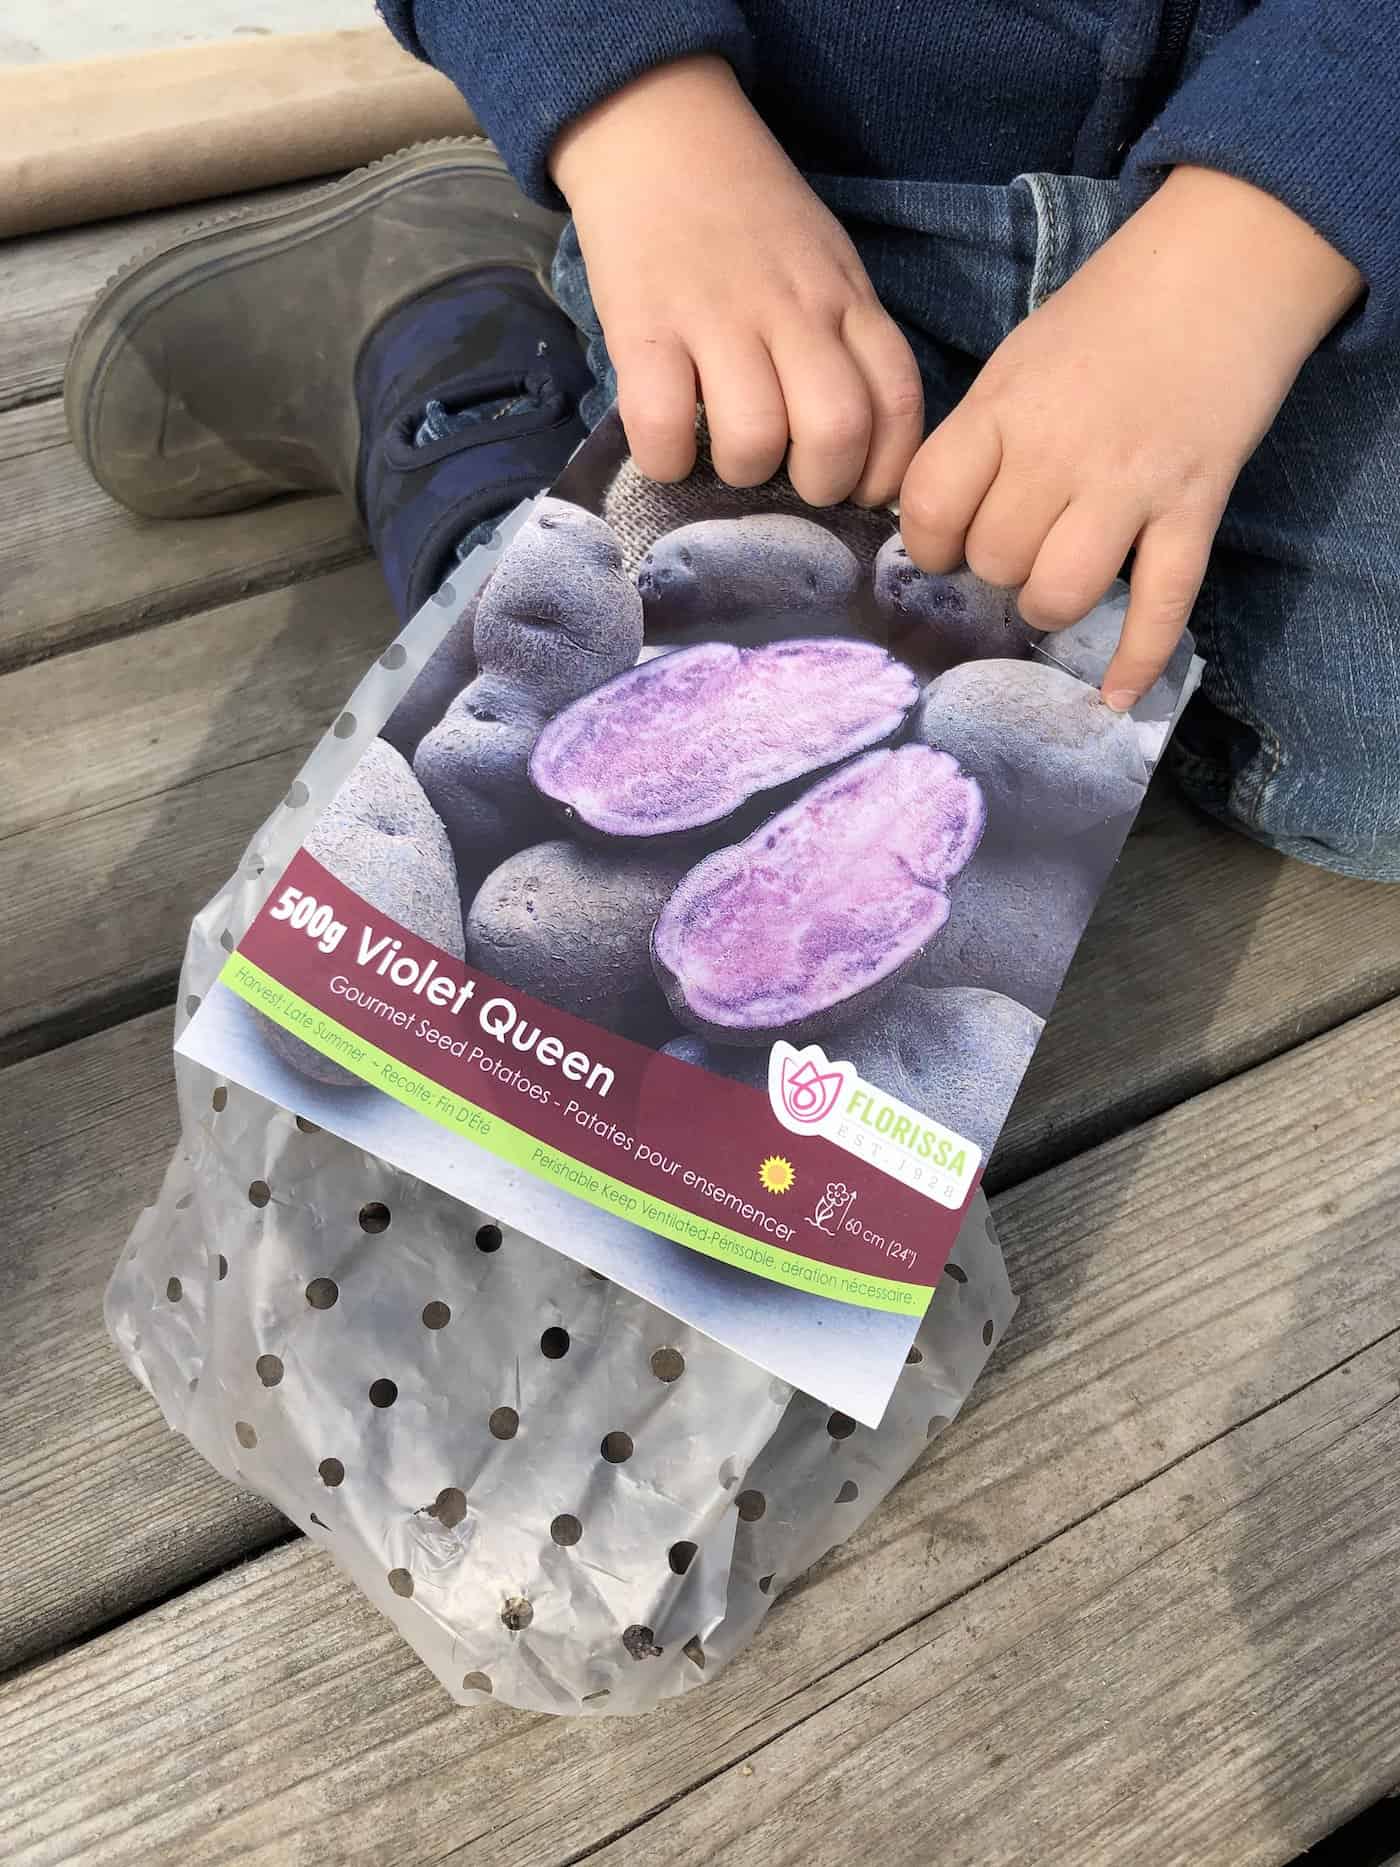 Violet queen bag of seed potatoes